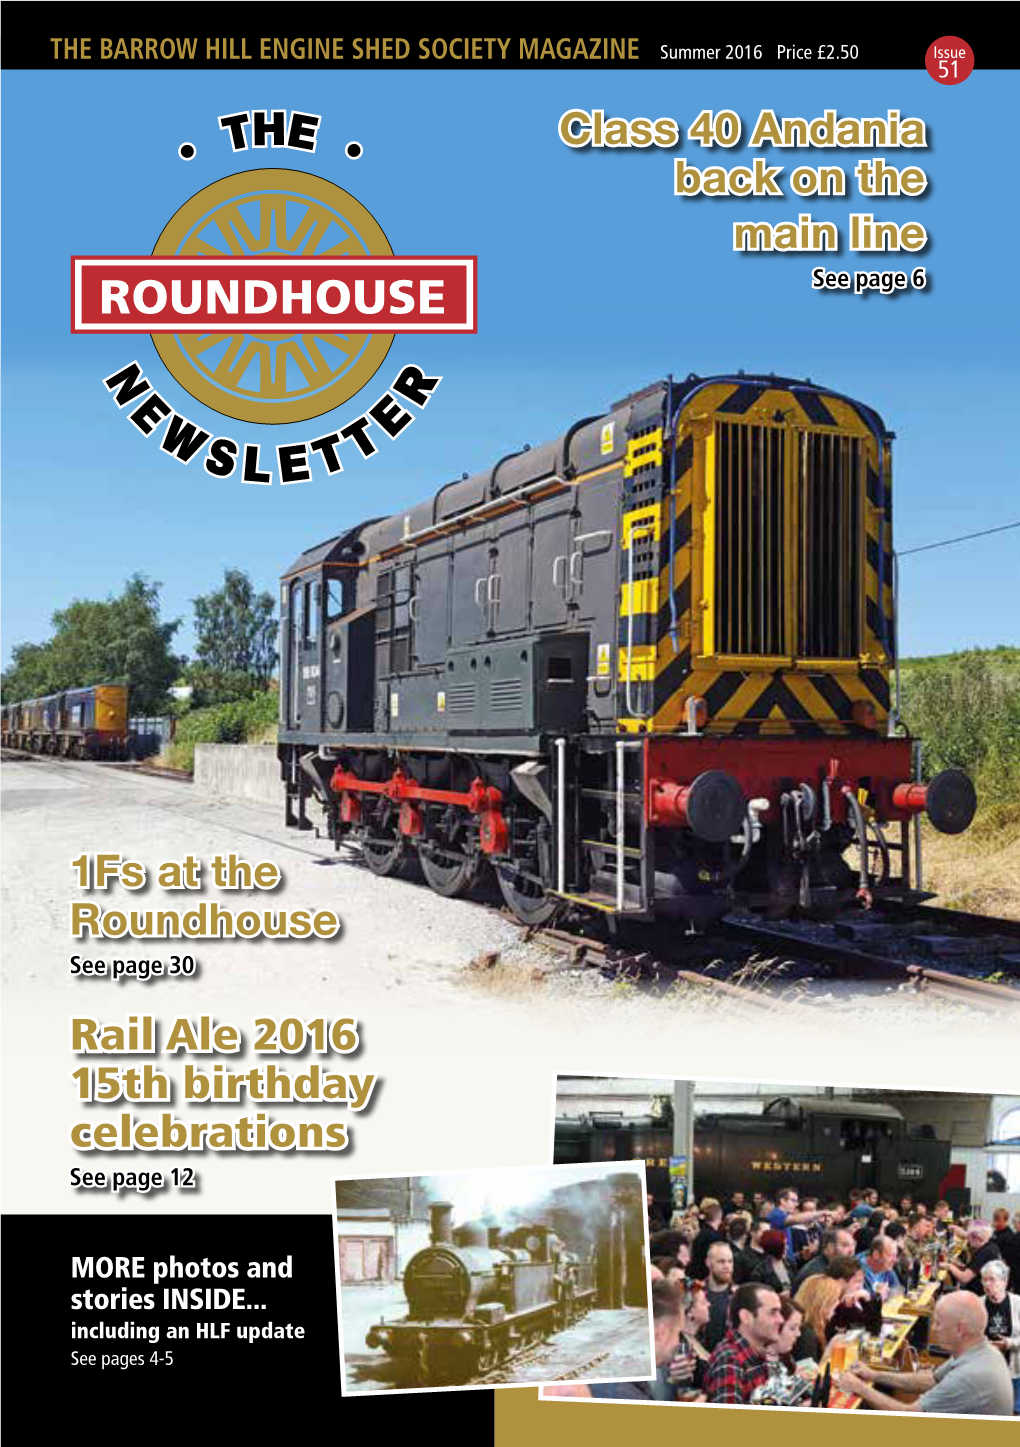 Rail Ale 2016 15Th Birthday Celebrations 1Fs at The